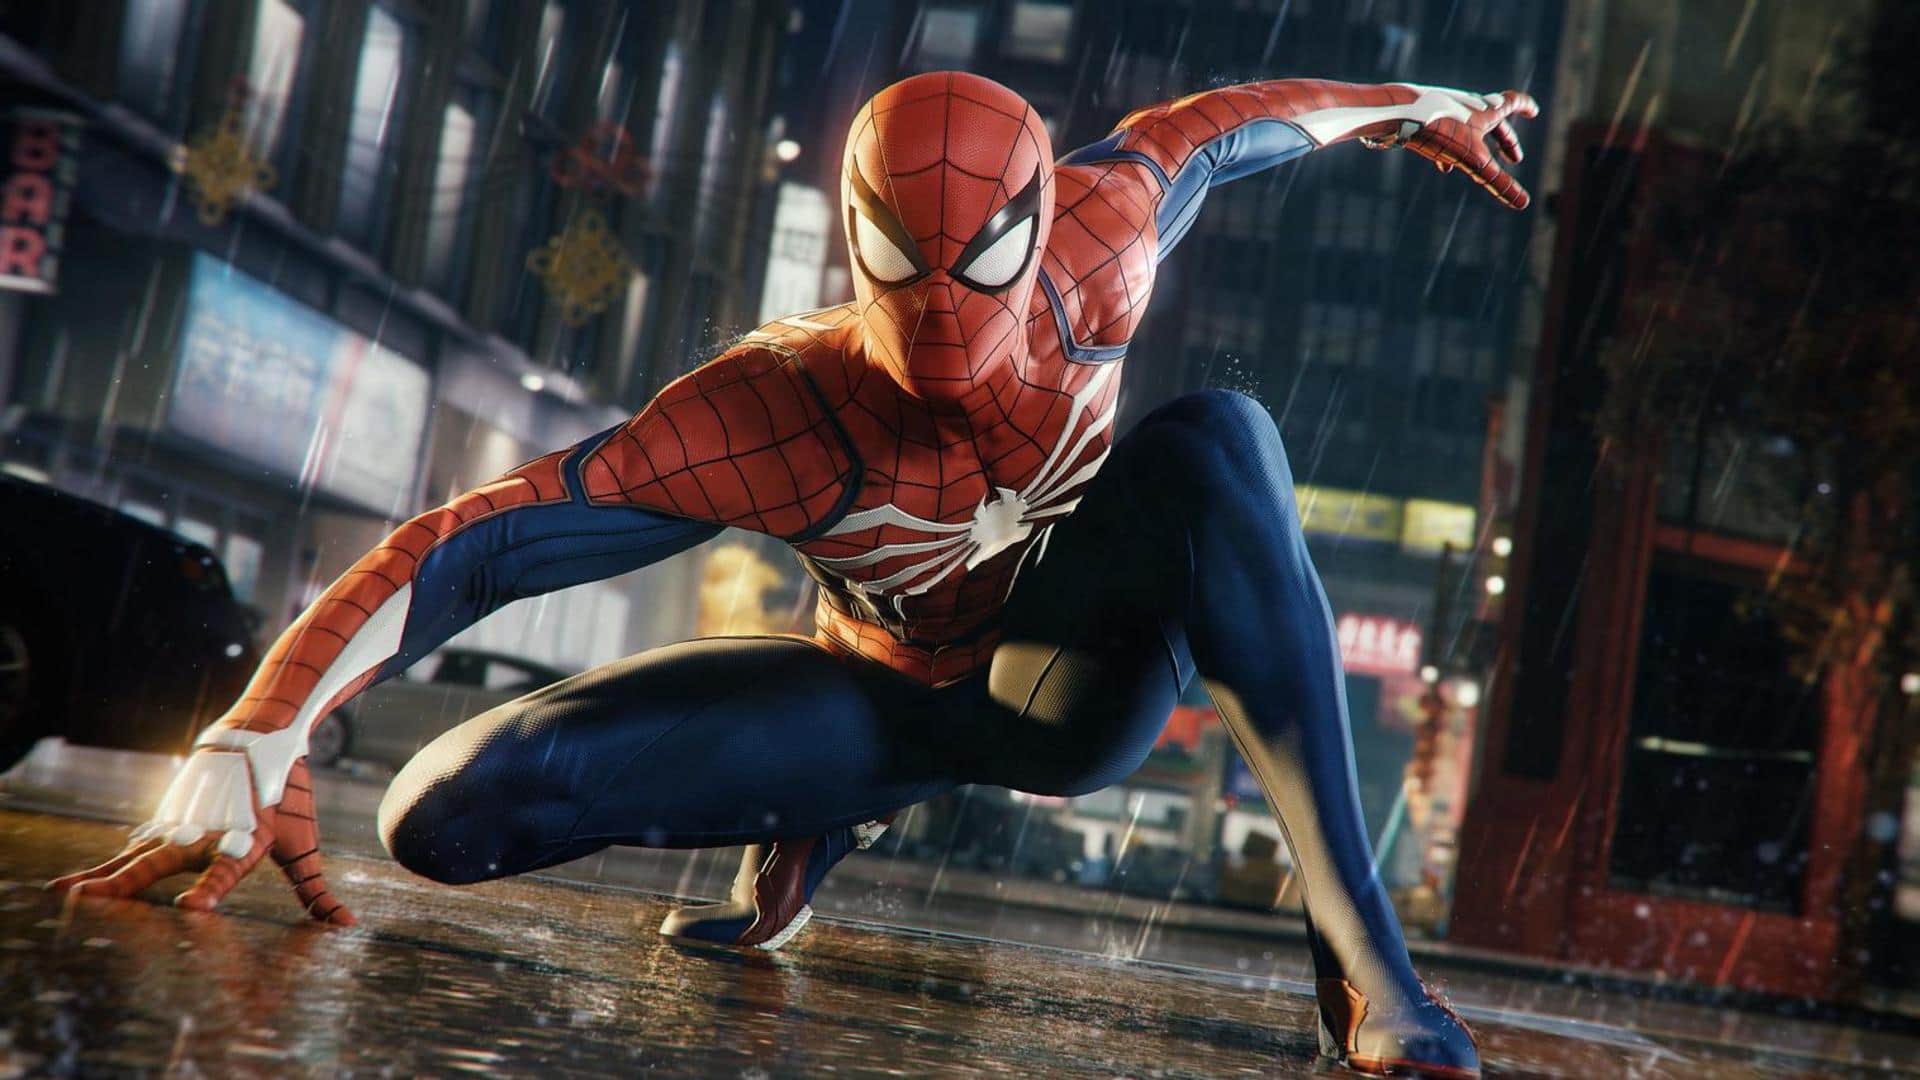 What makes Spider-Man most beloved superhero in America